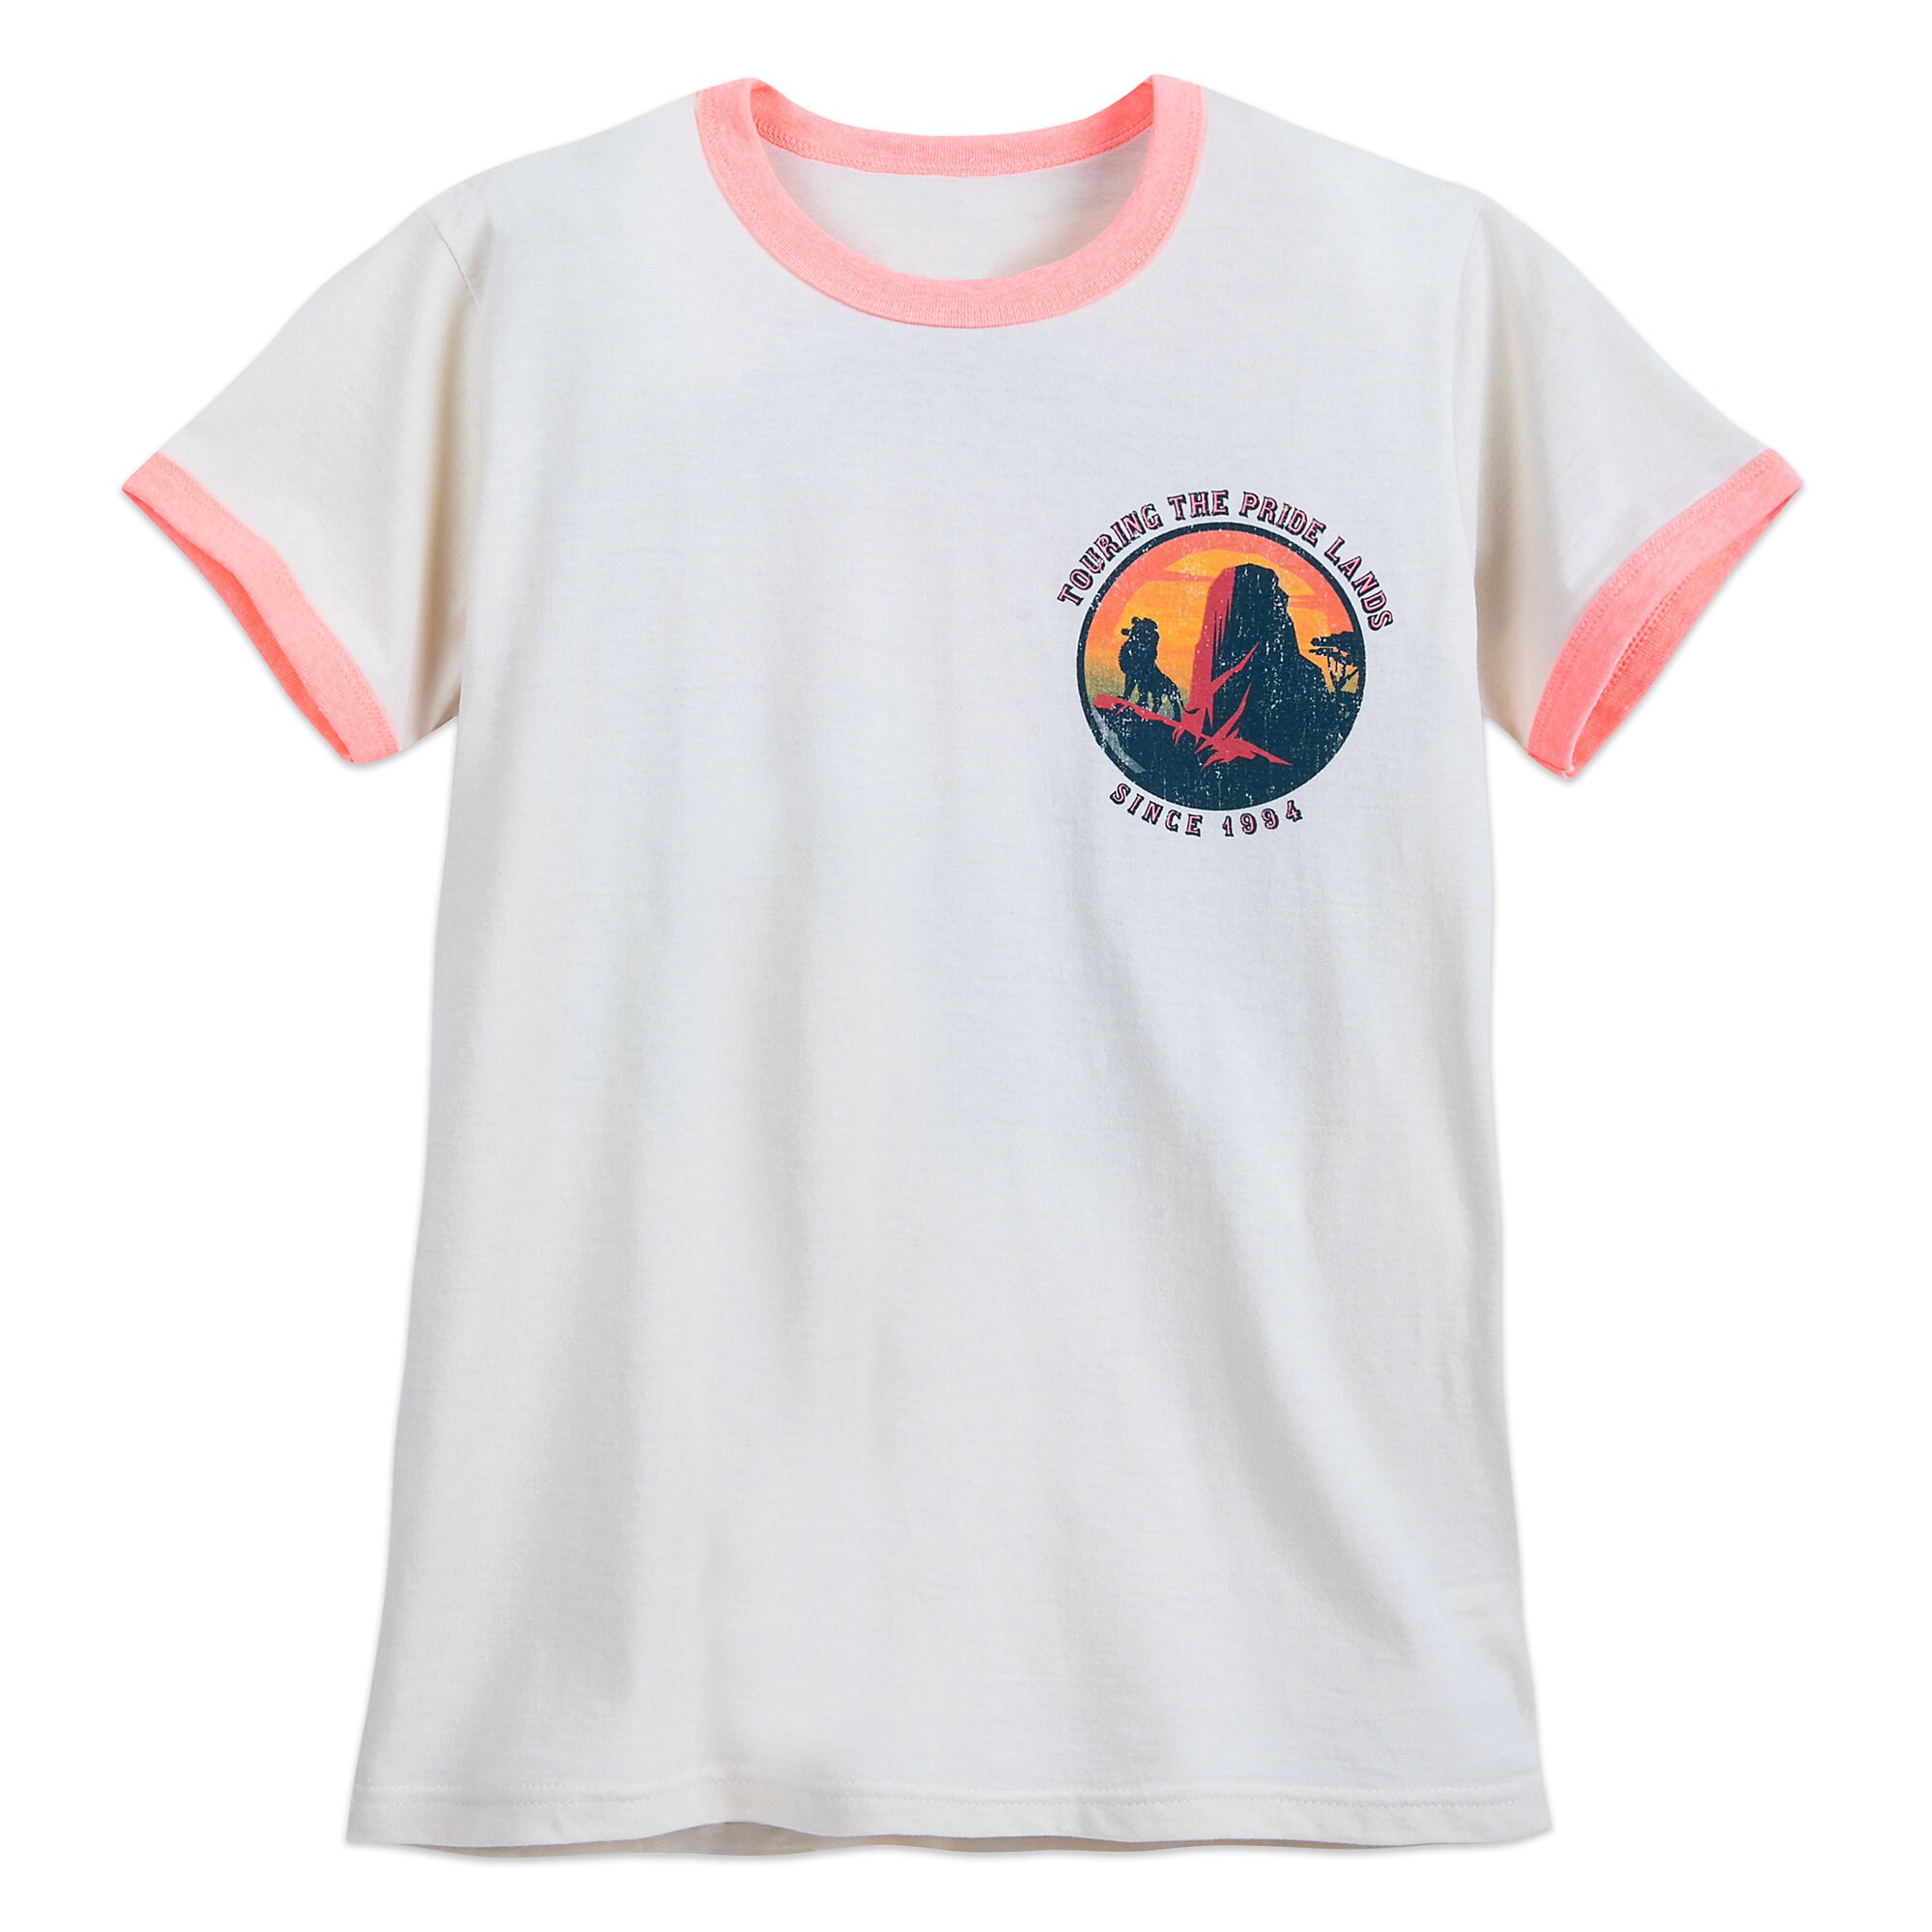 Hakuna Matata Tours Ringer T-Shirt for Women - The Lion King